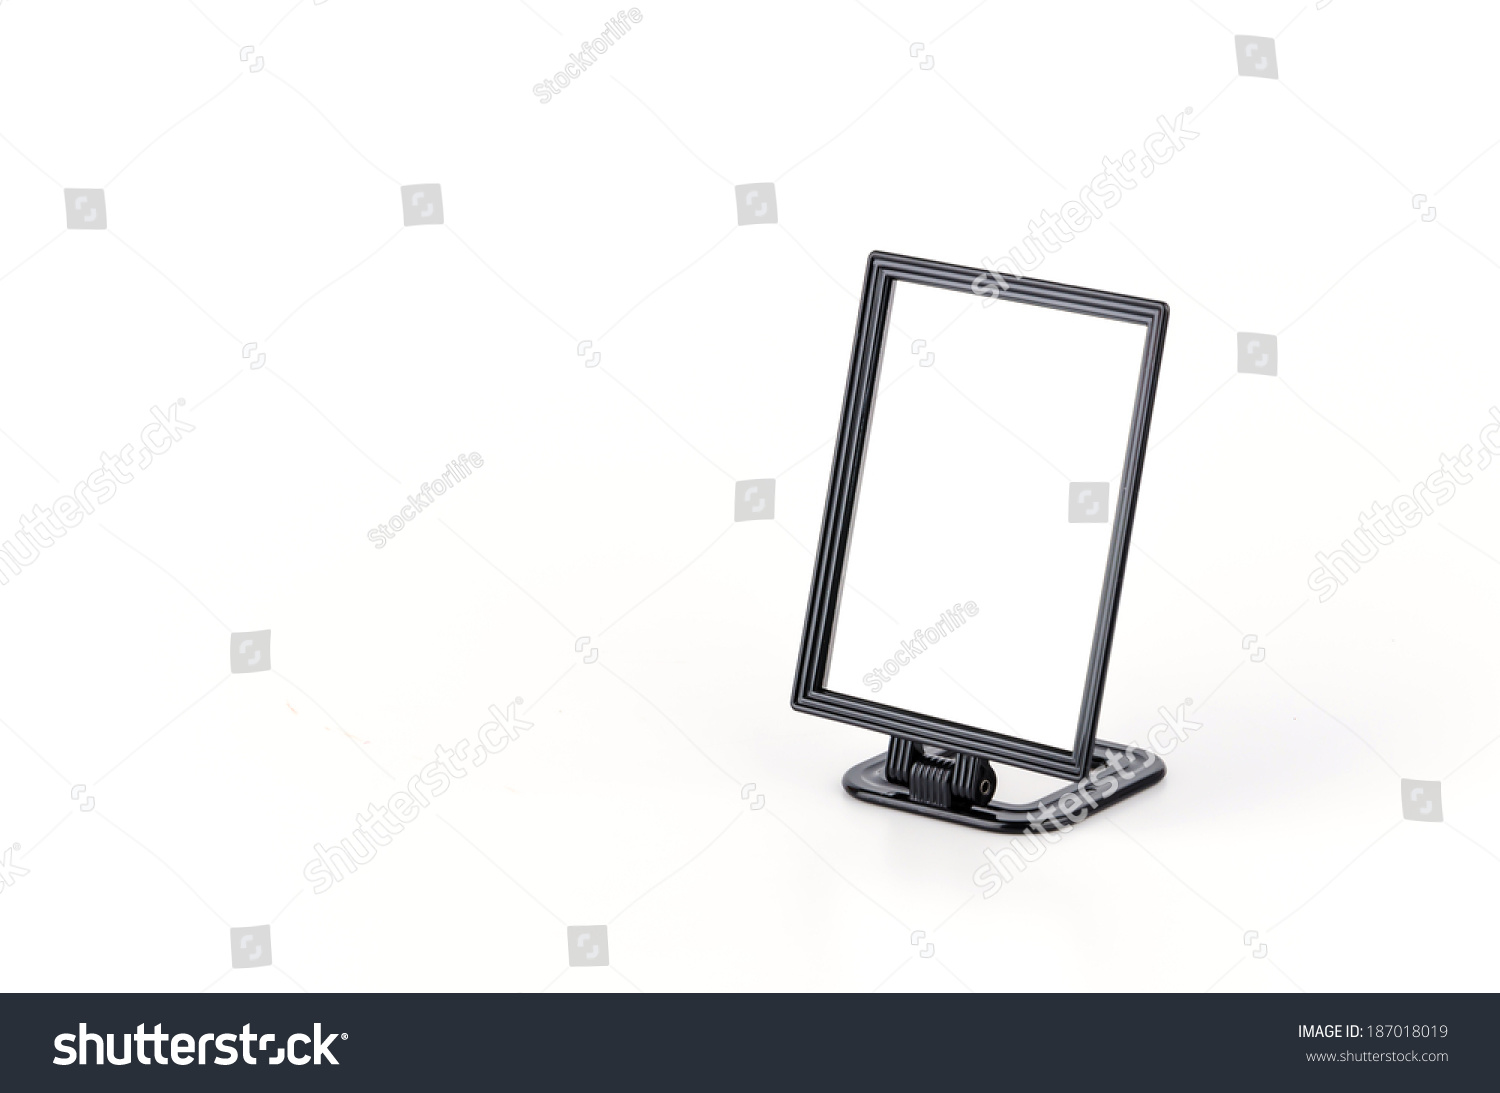 Mirror Isolated White Background Stock Photo 187018019 - Shutterstock